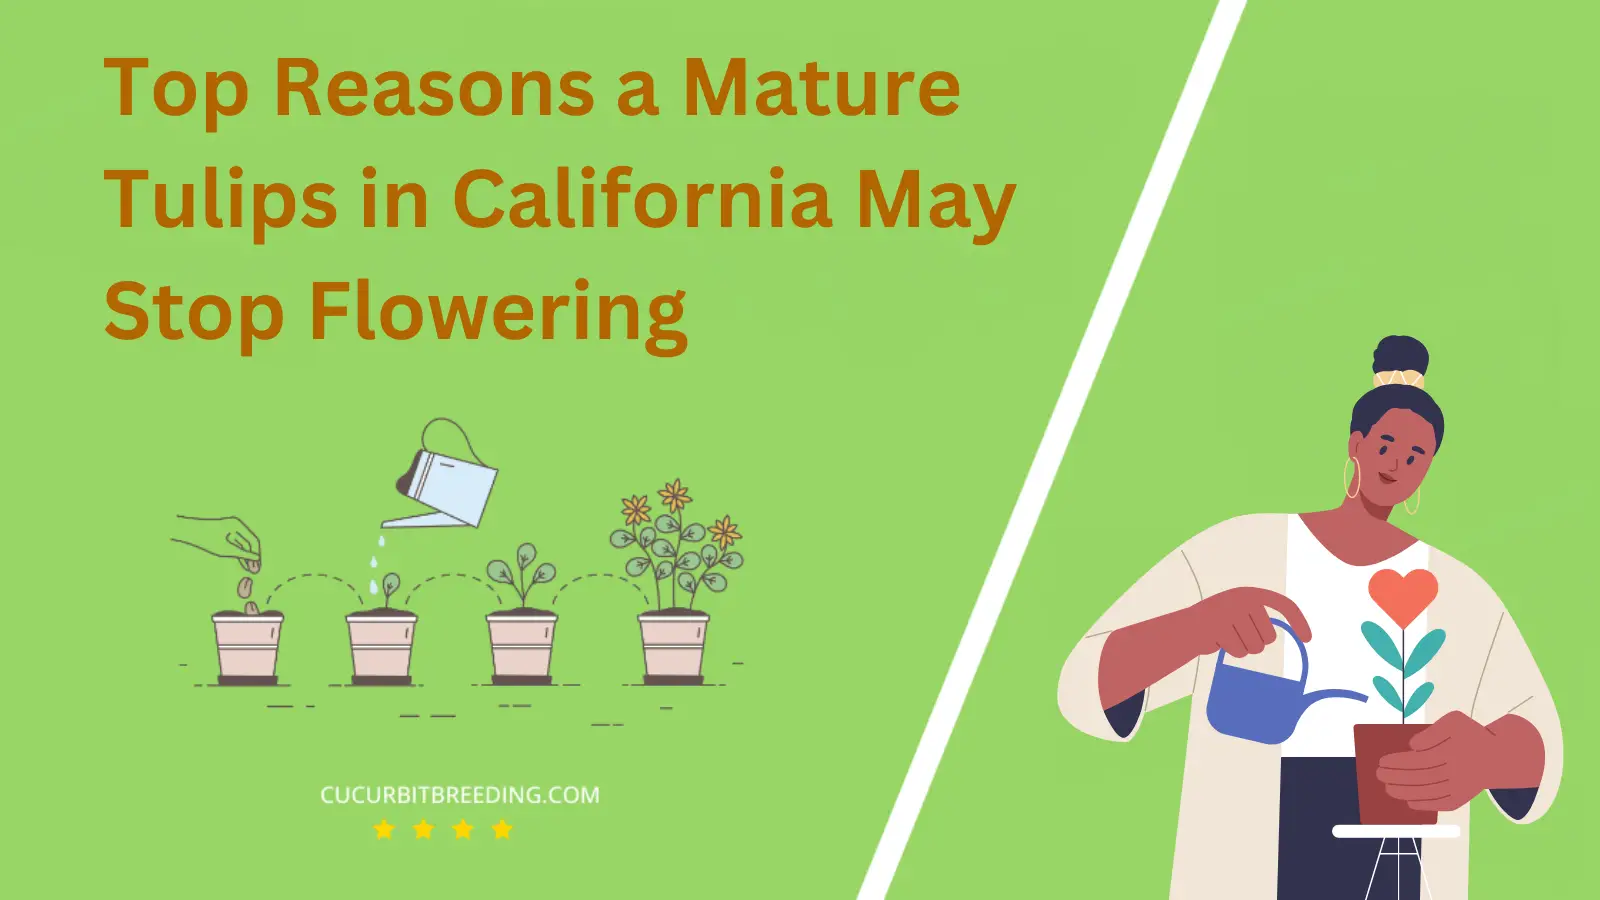 Top Reasons a Mature Tulips in California May Stop Flowering